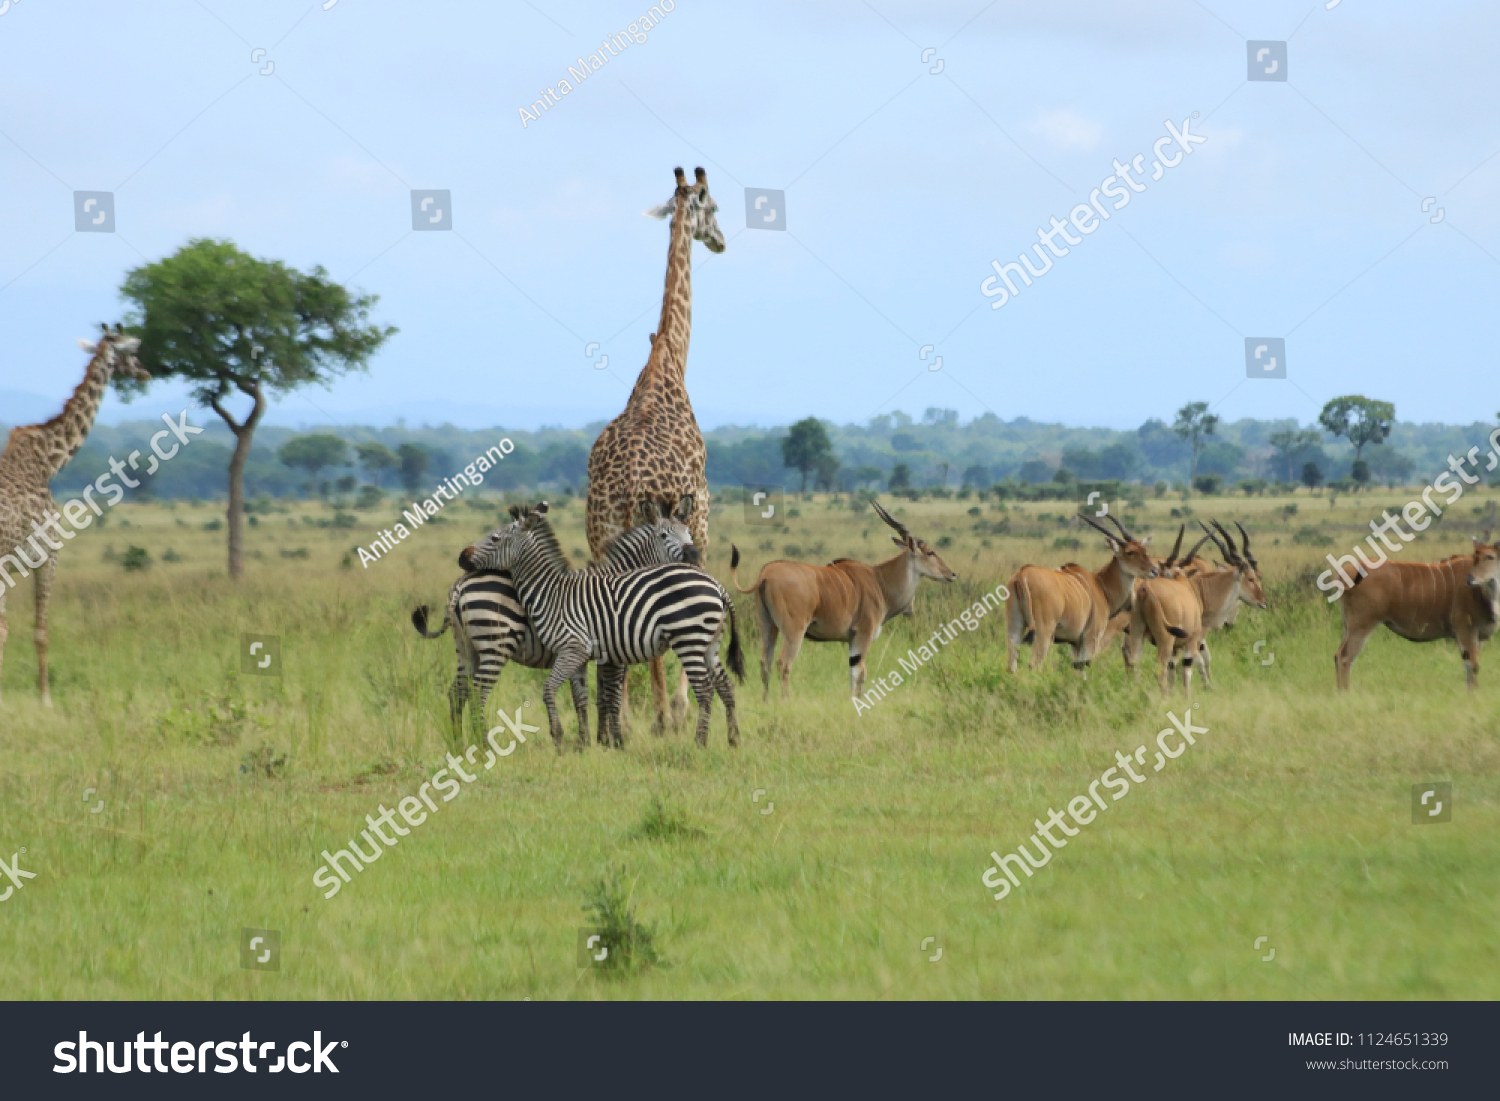 Zebras and giraffes walking in the savannah in Mukumi National Park during the rain season with some acacia trees around, Tanzania, Africa #1124651339